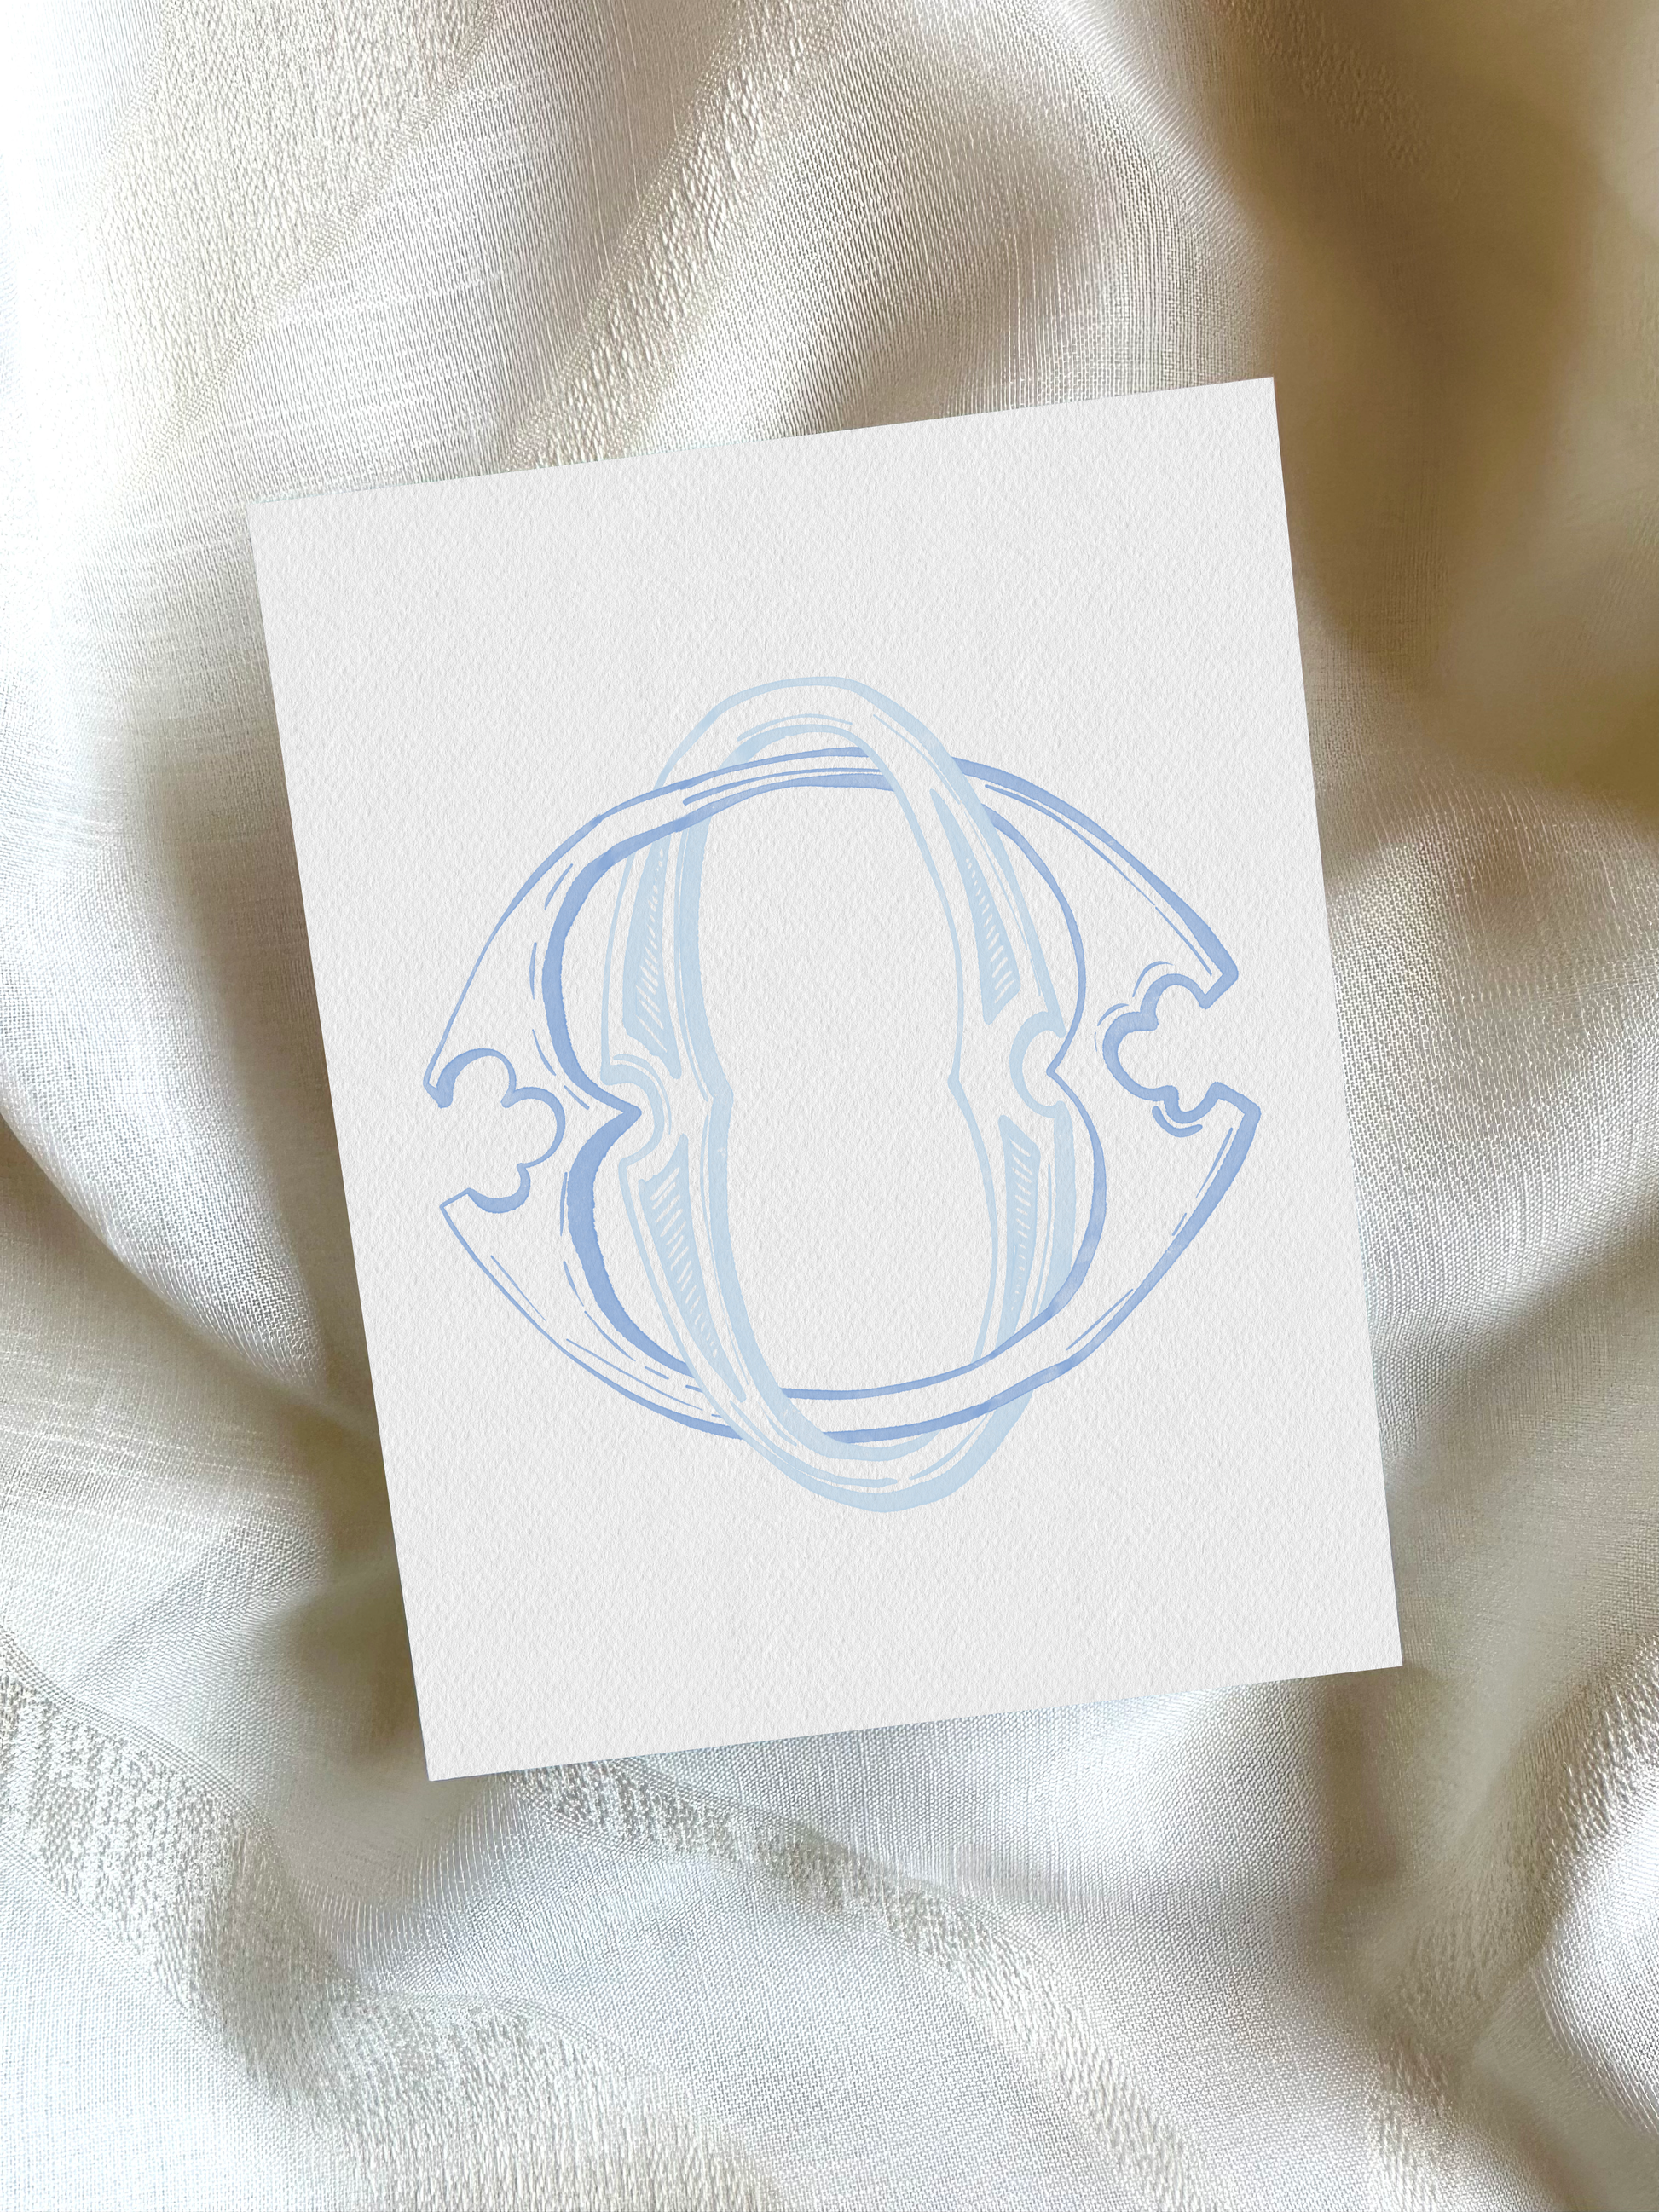 2 Letter Monogram with Letters OO | Digital Download - Wedding Monogram SVG, Personal Logo, Wedding Logo for Wedding Invitations The Wedding Crest Lab